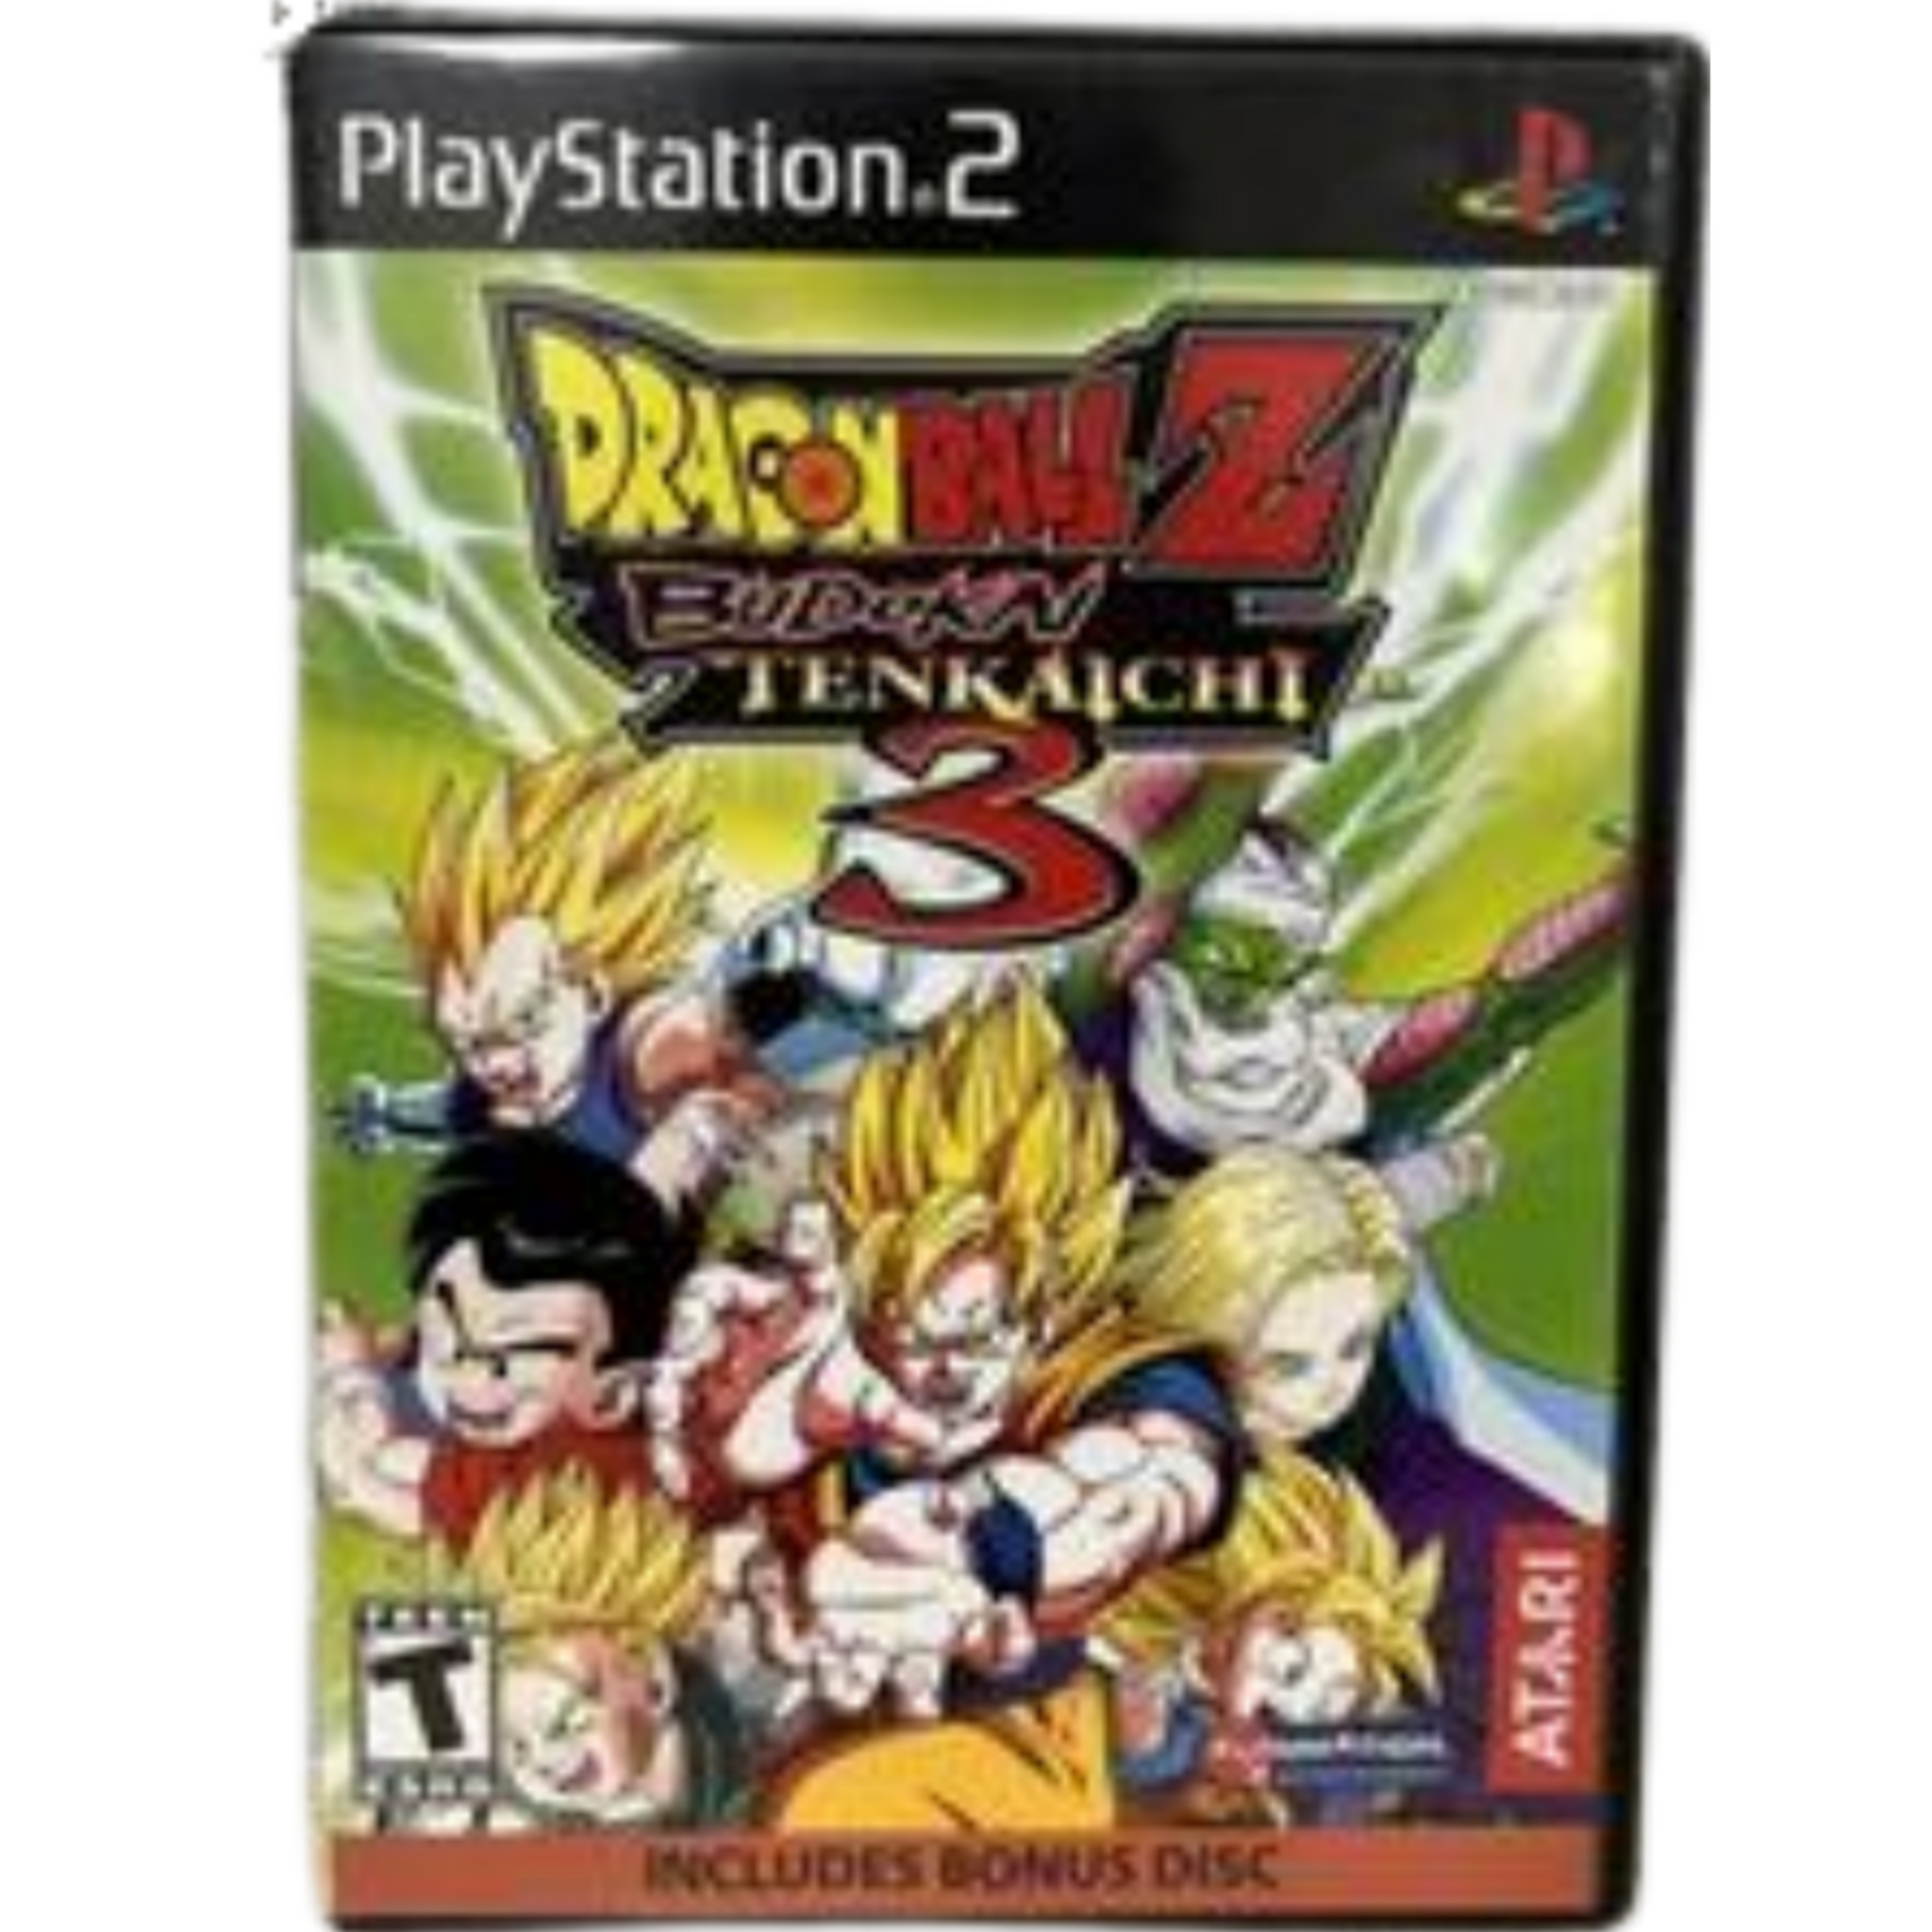 Buy Dragon Ball Z: Budokai Tenkaichi 3 for PS2